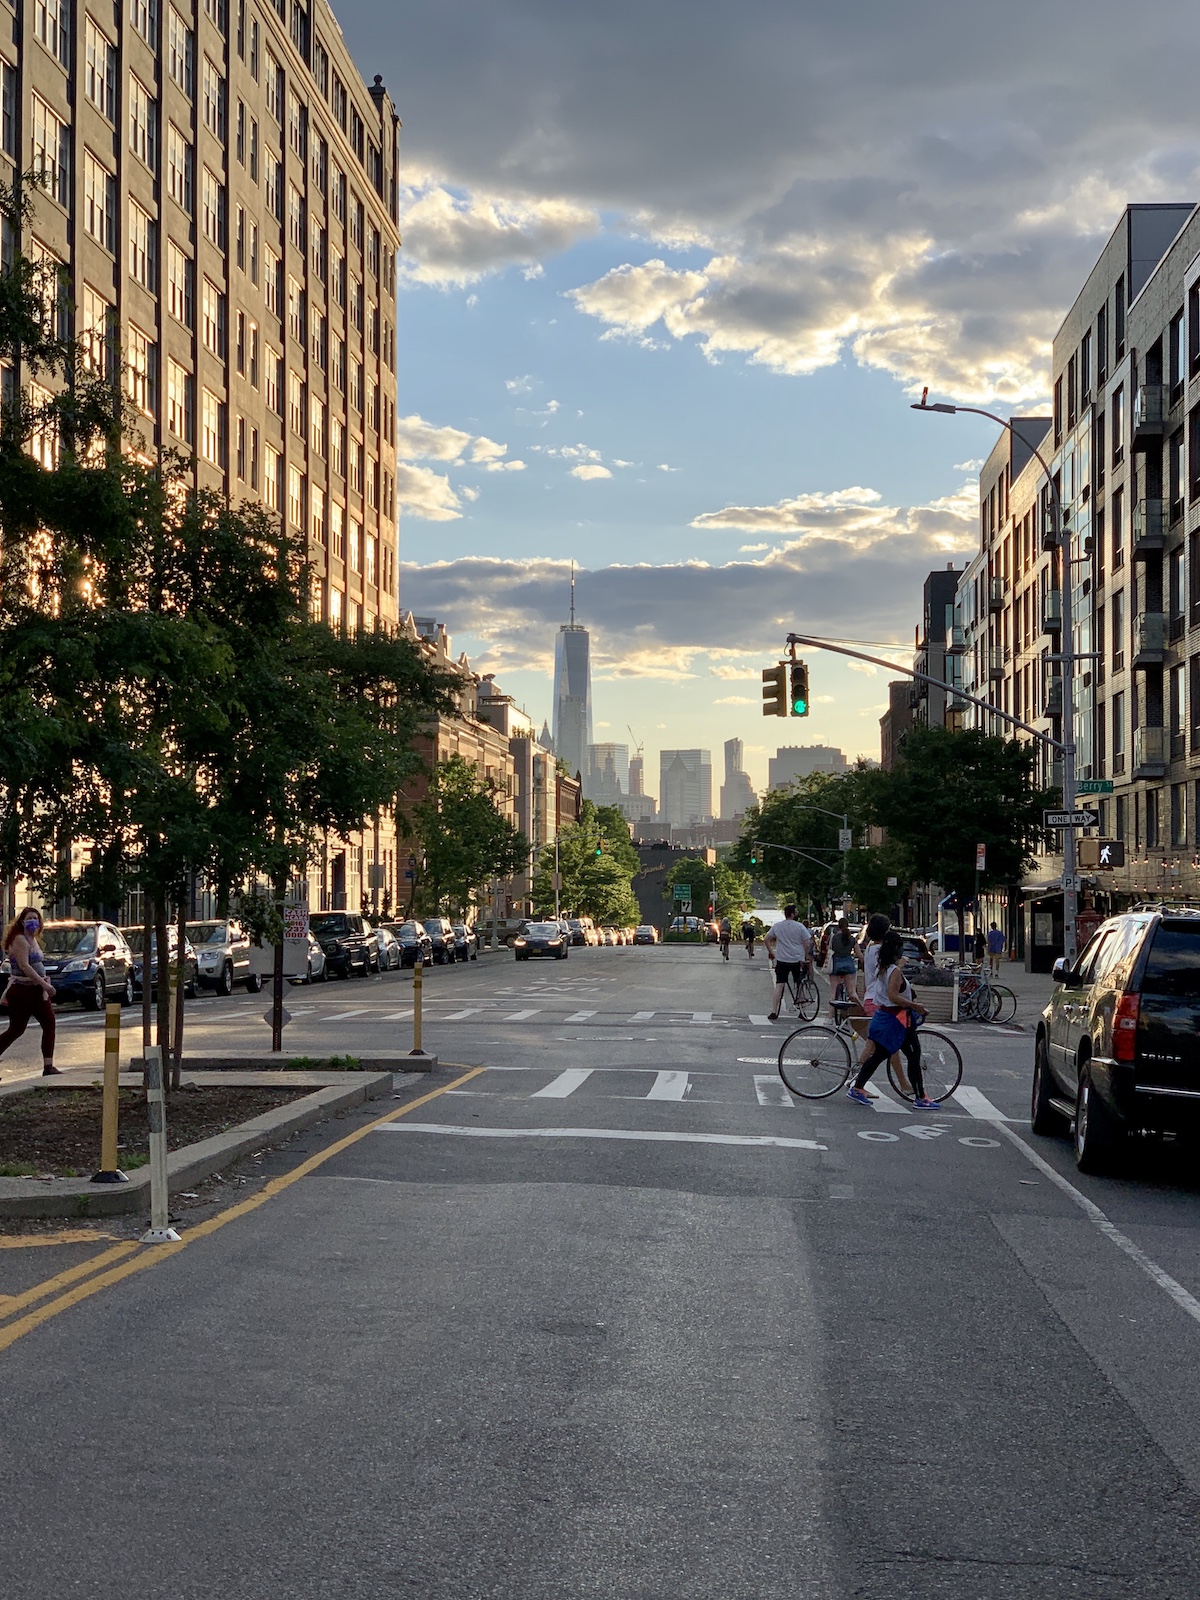 View towards Manhattan from an urban street in Williamsburg, Brooklyn